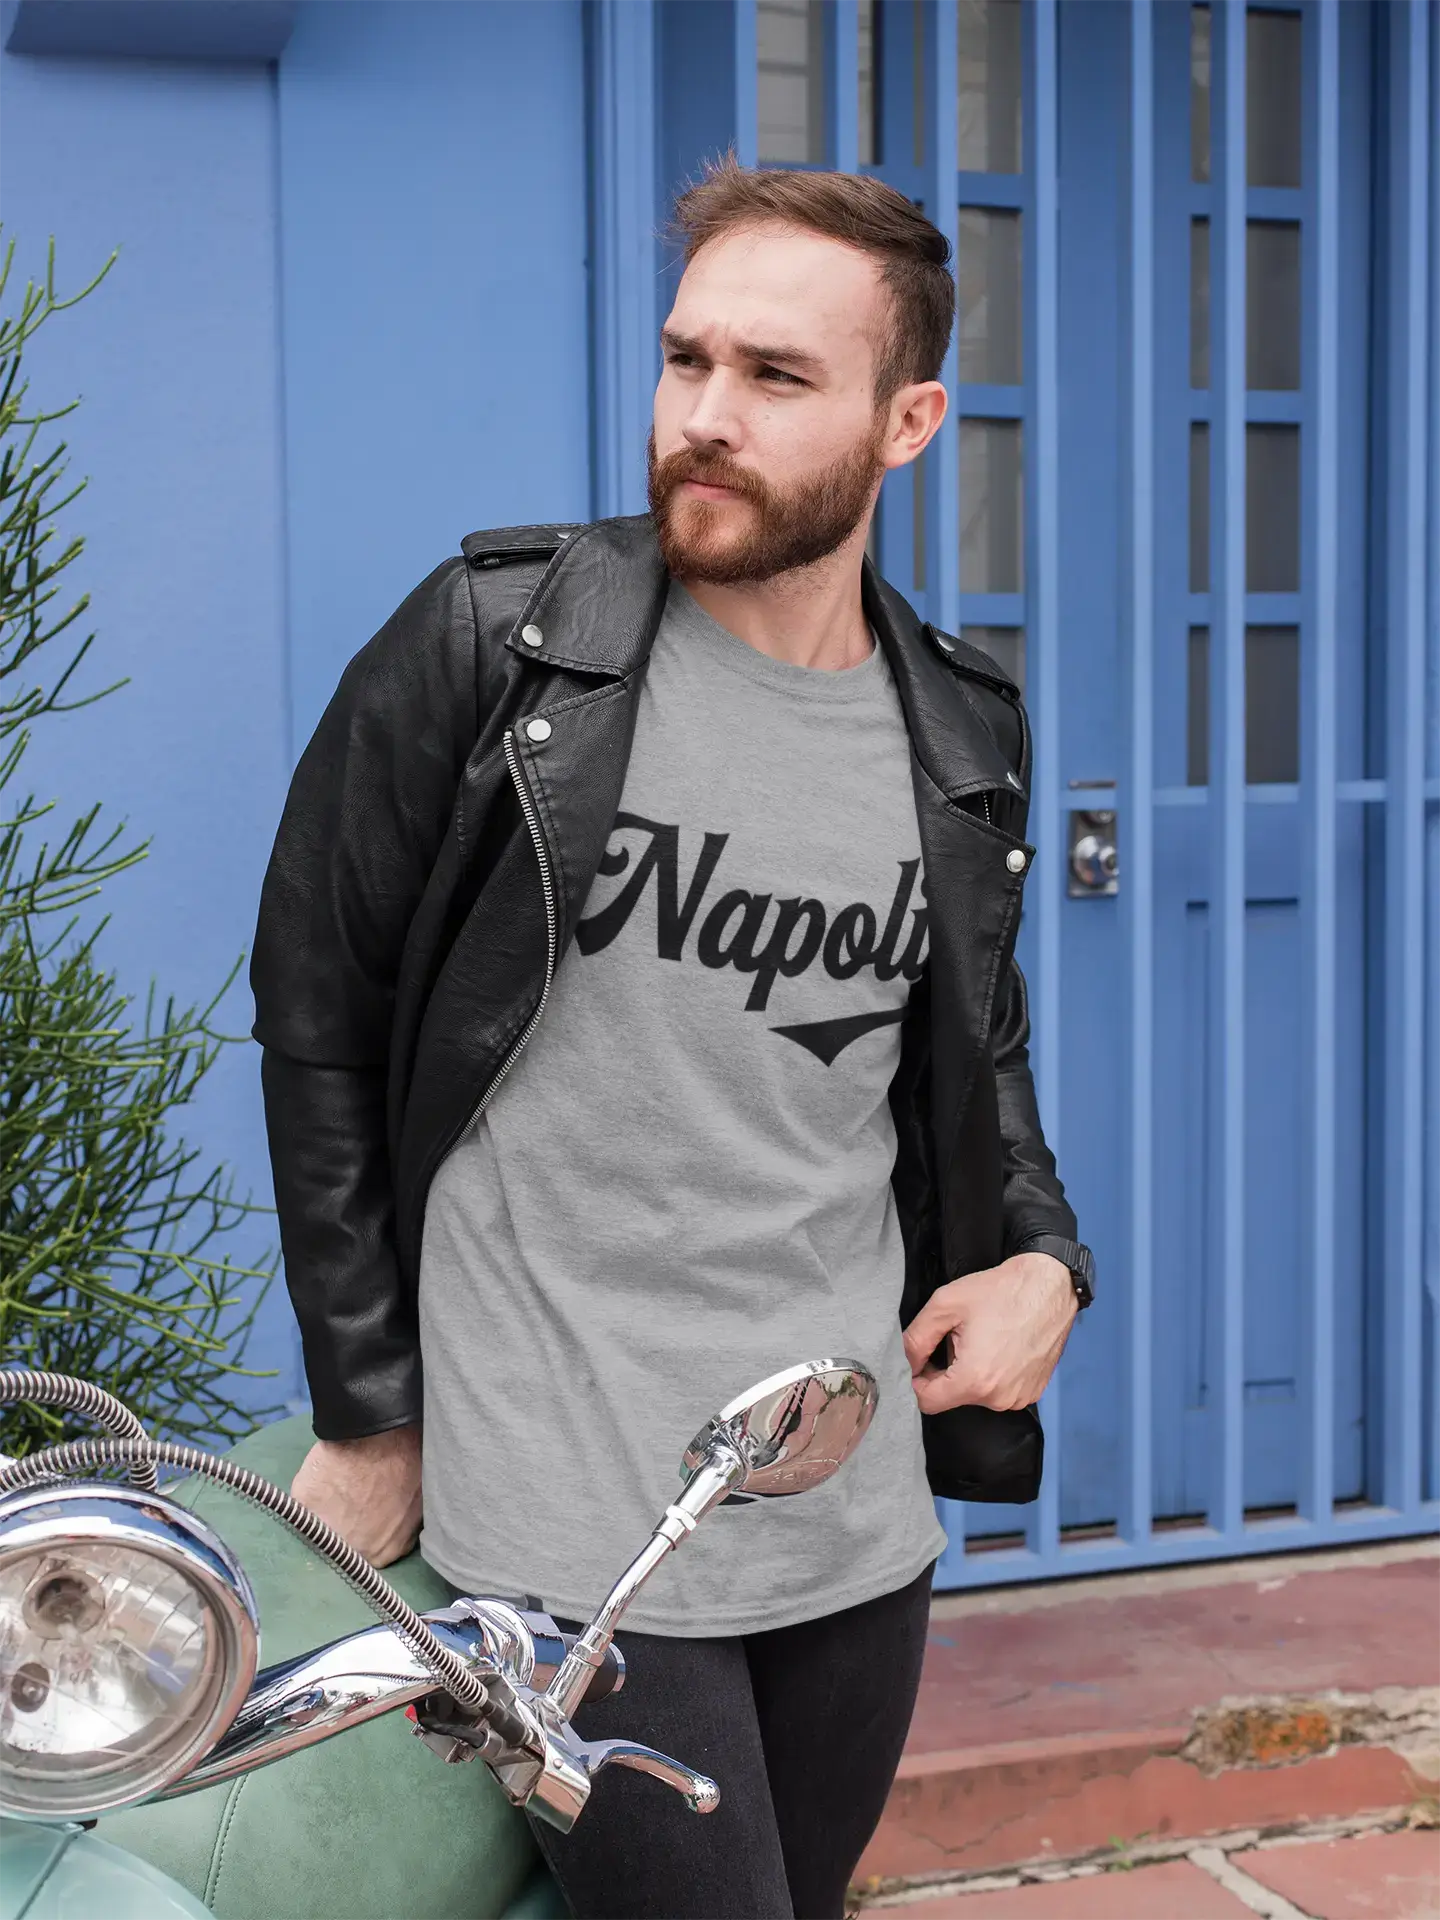 ULTRABASIC - Napoli-T-Shirt <span>für Herren</span> <span>mit Grafikdruck,</span> <span>Vintage</span> - <span>Weiß</span>